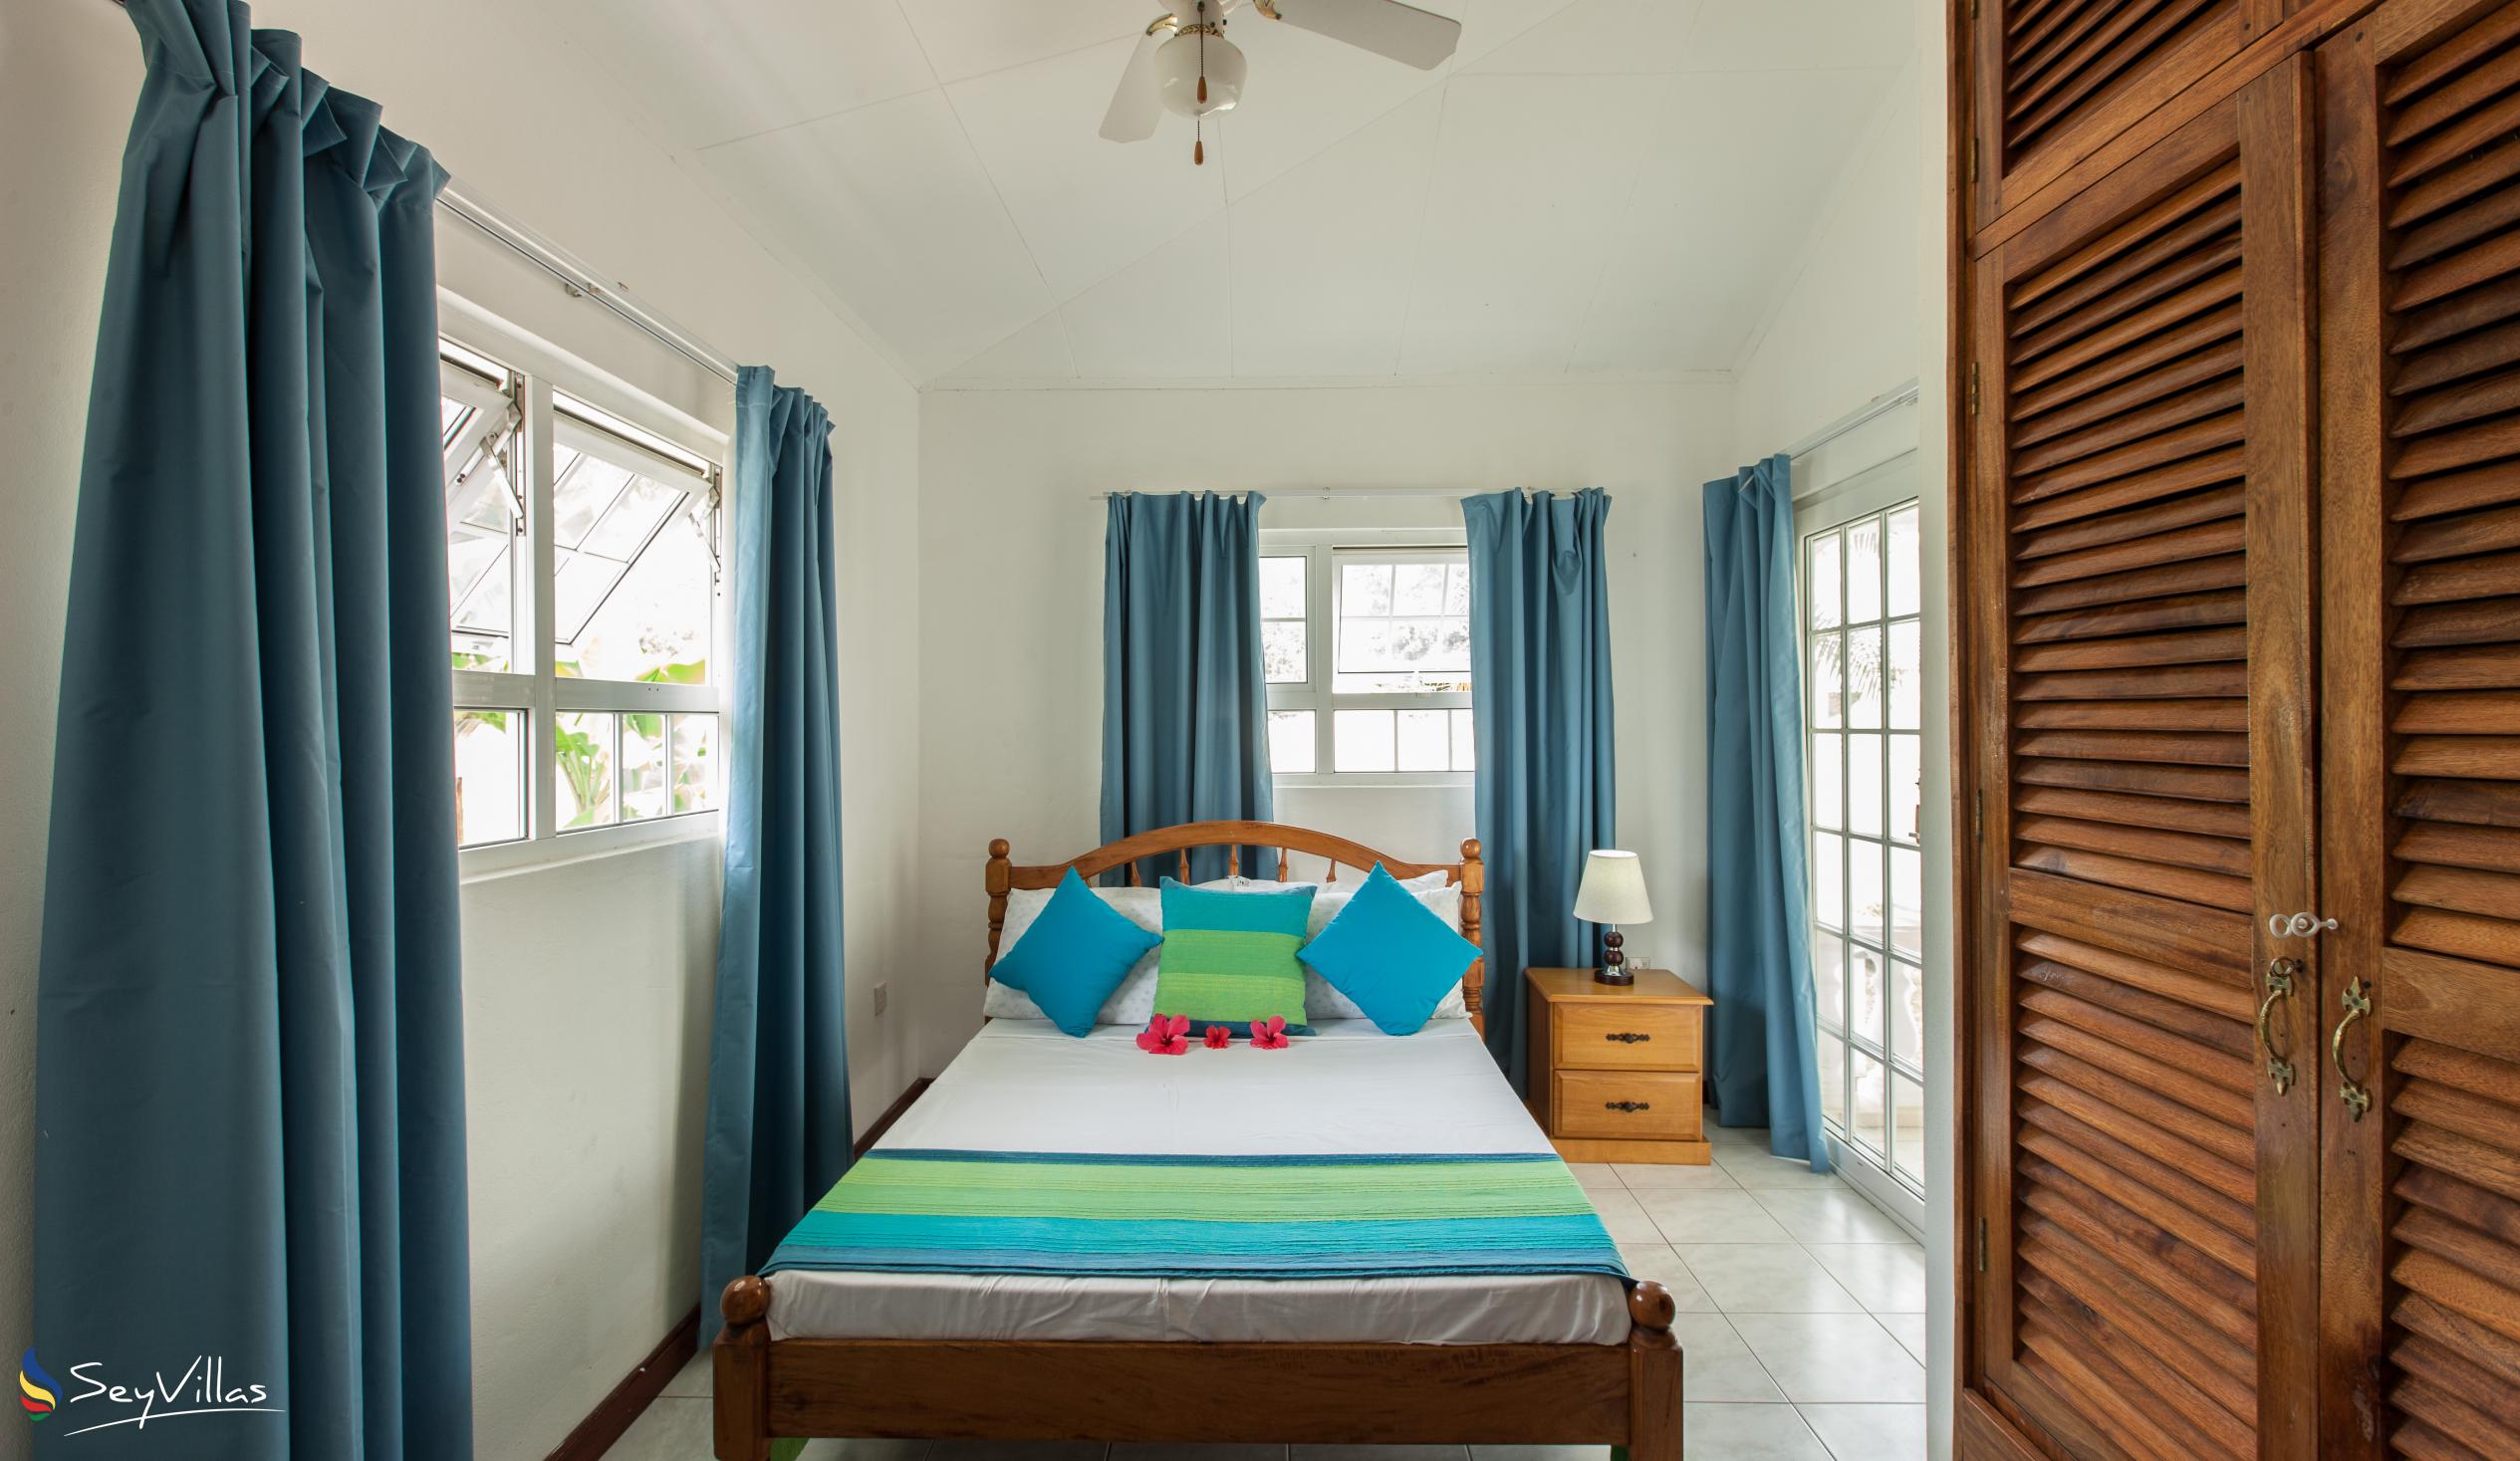 Photo 22: Villa Confort - Praslin (Seychelles)